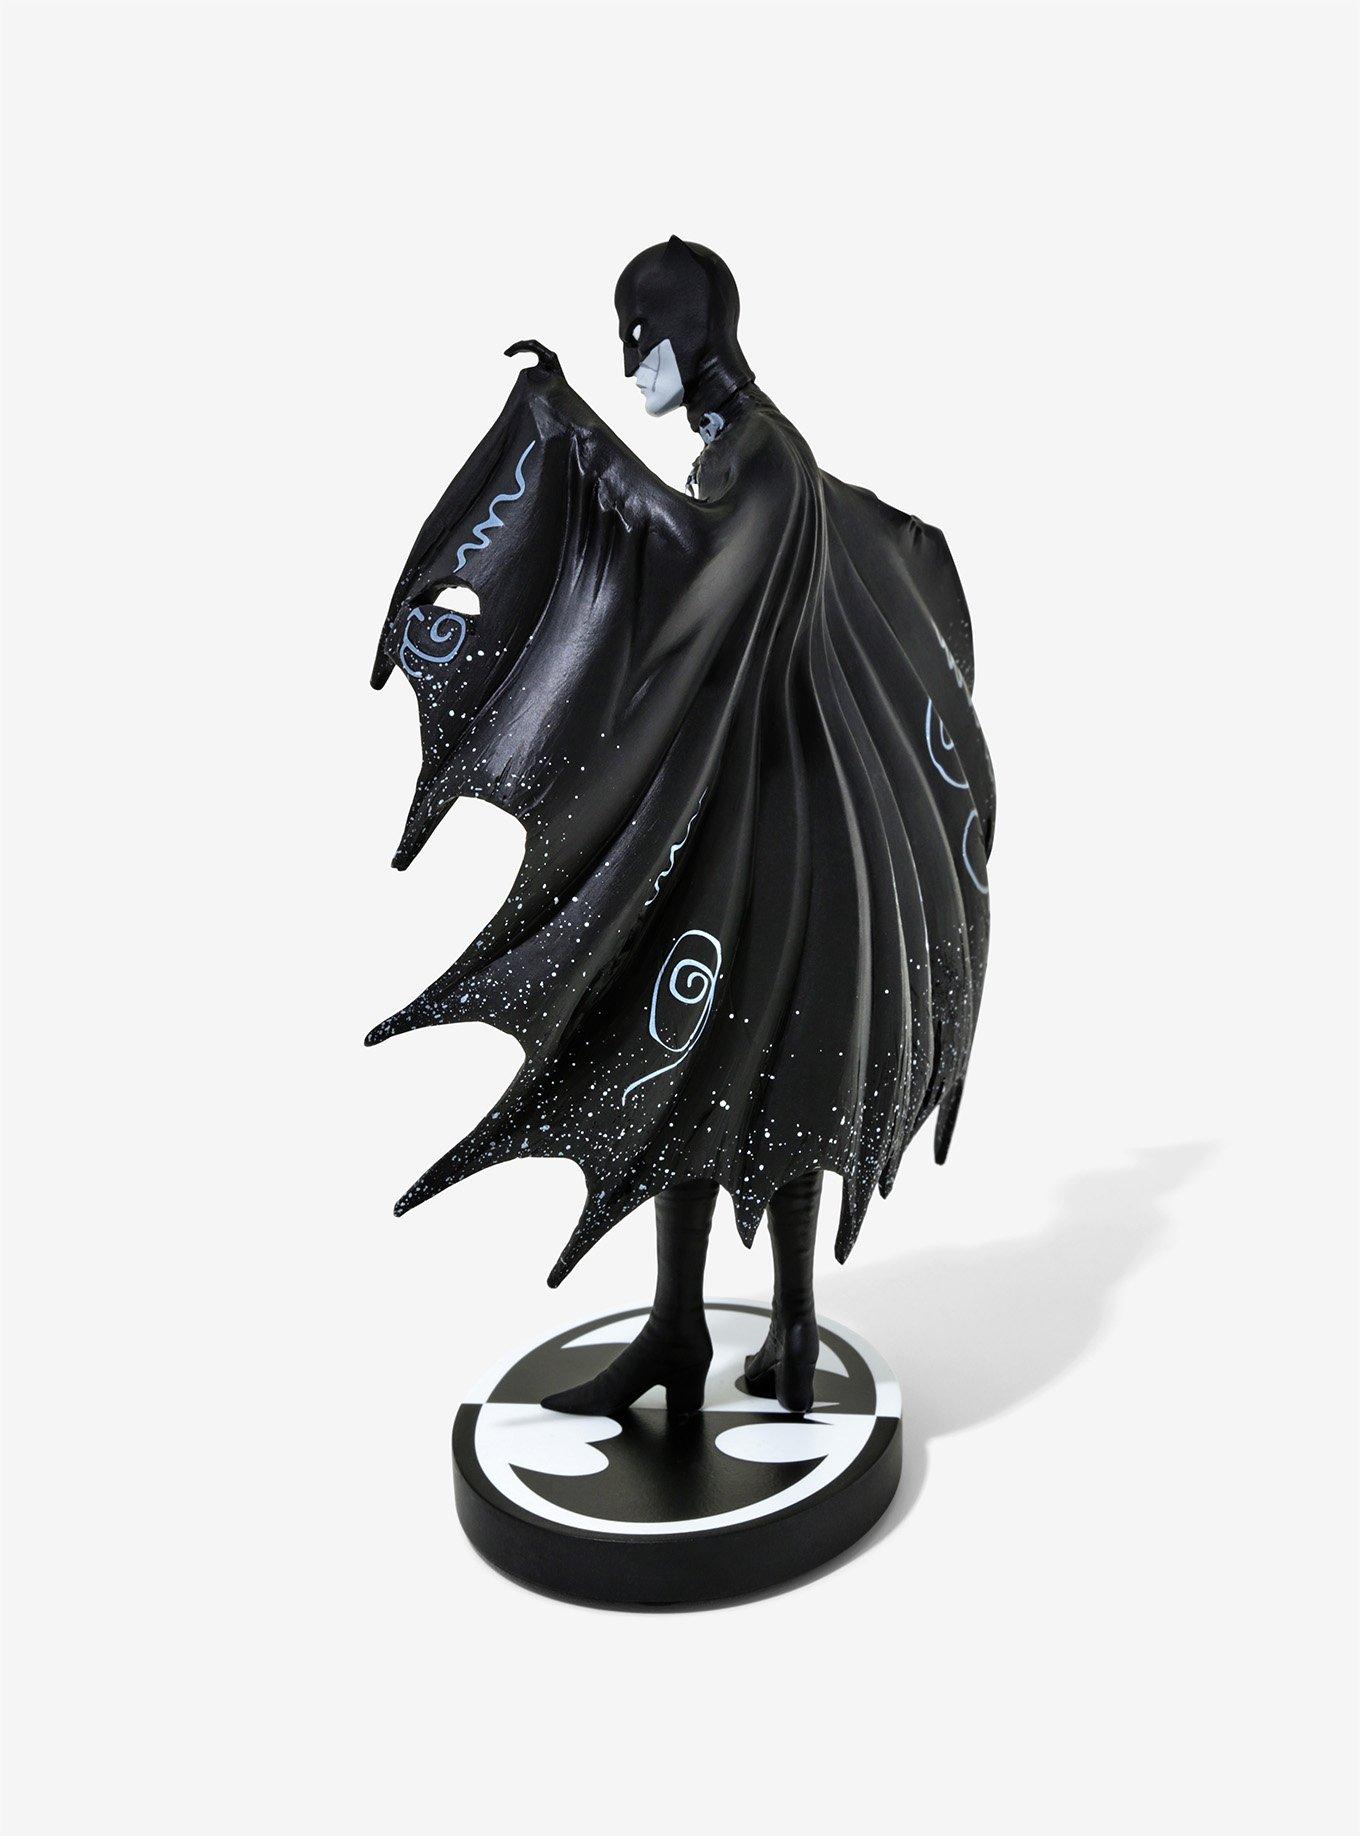 DC Collectibles Batman Black & White Batman Way Statue Hot Topic Exclusive, , alternate